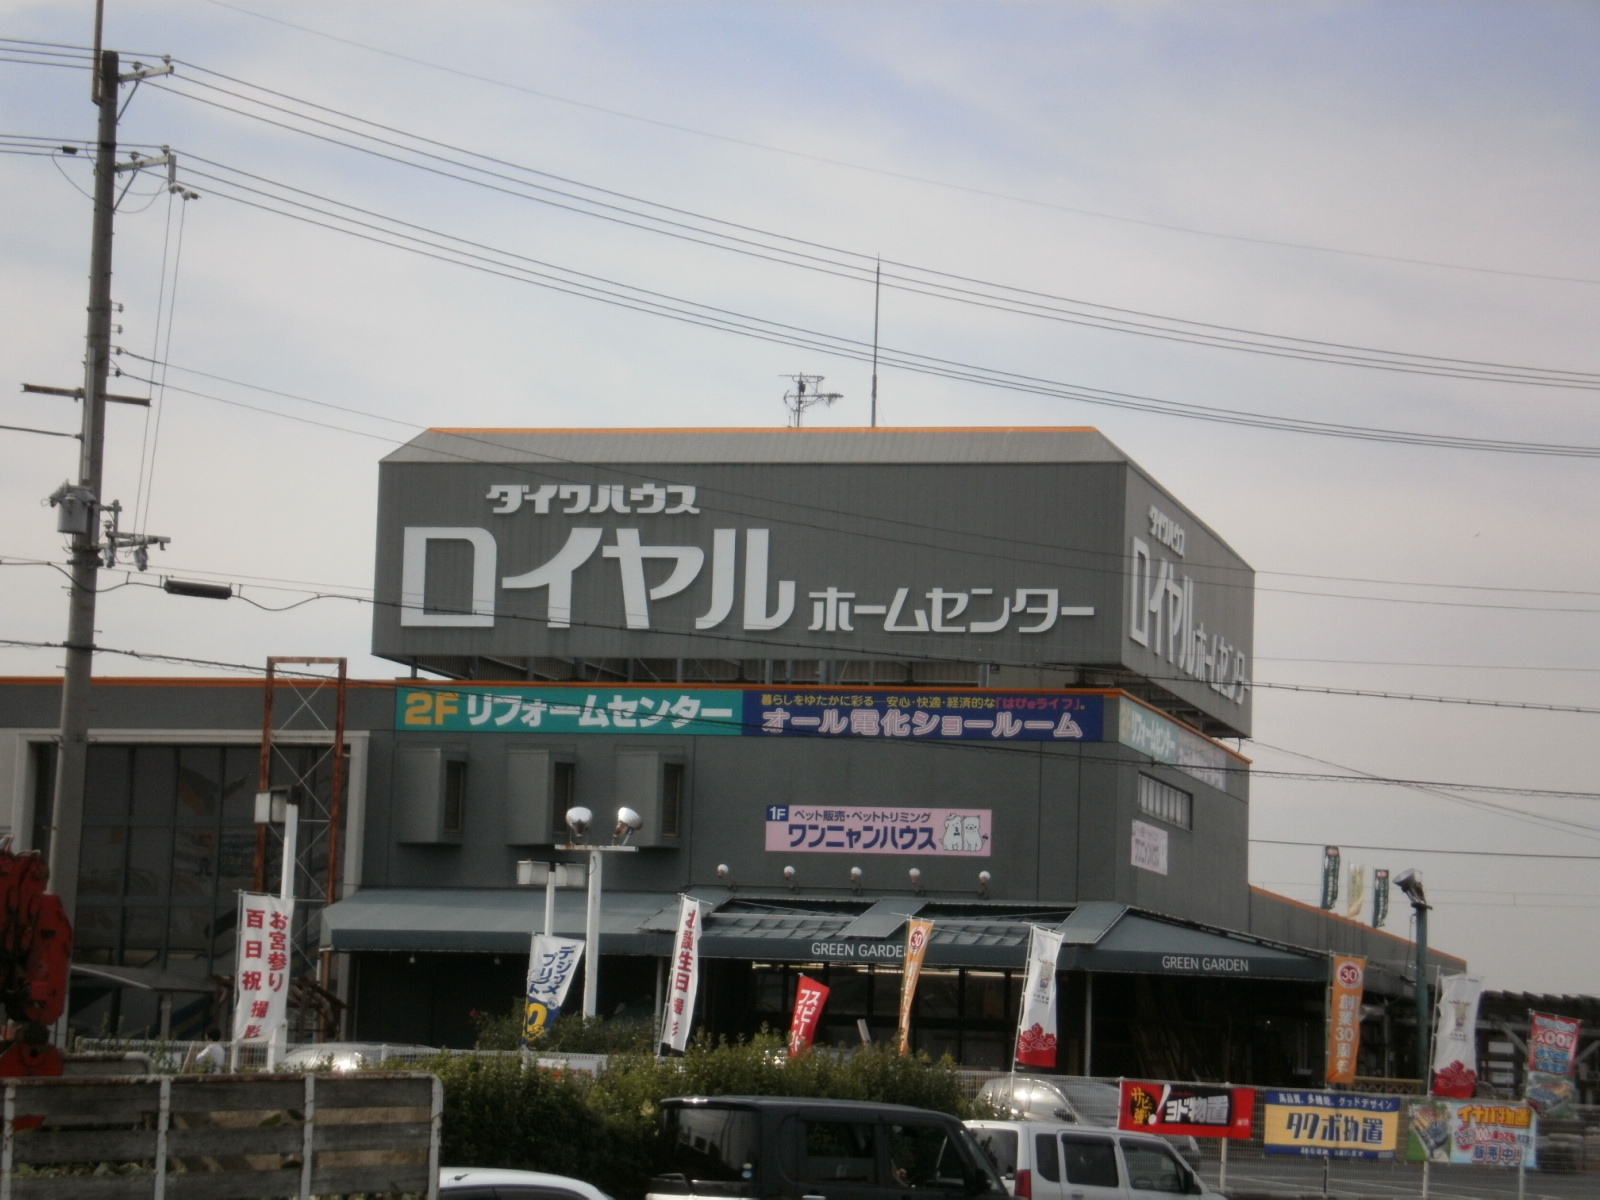 Home center. 1329m to the home center O Joyful Kashihara store (hardware store)